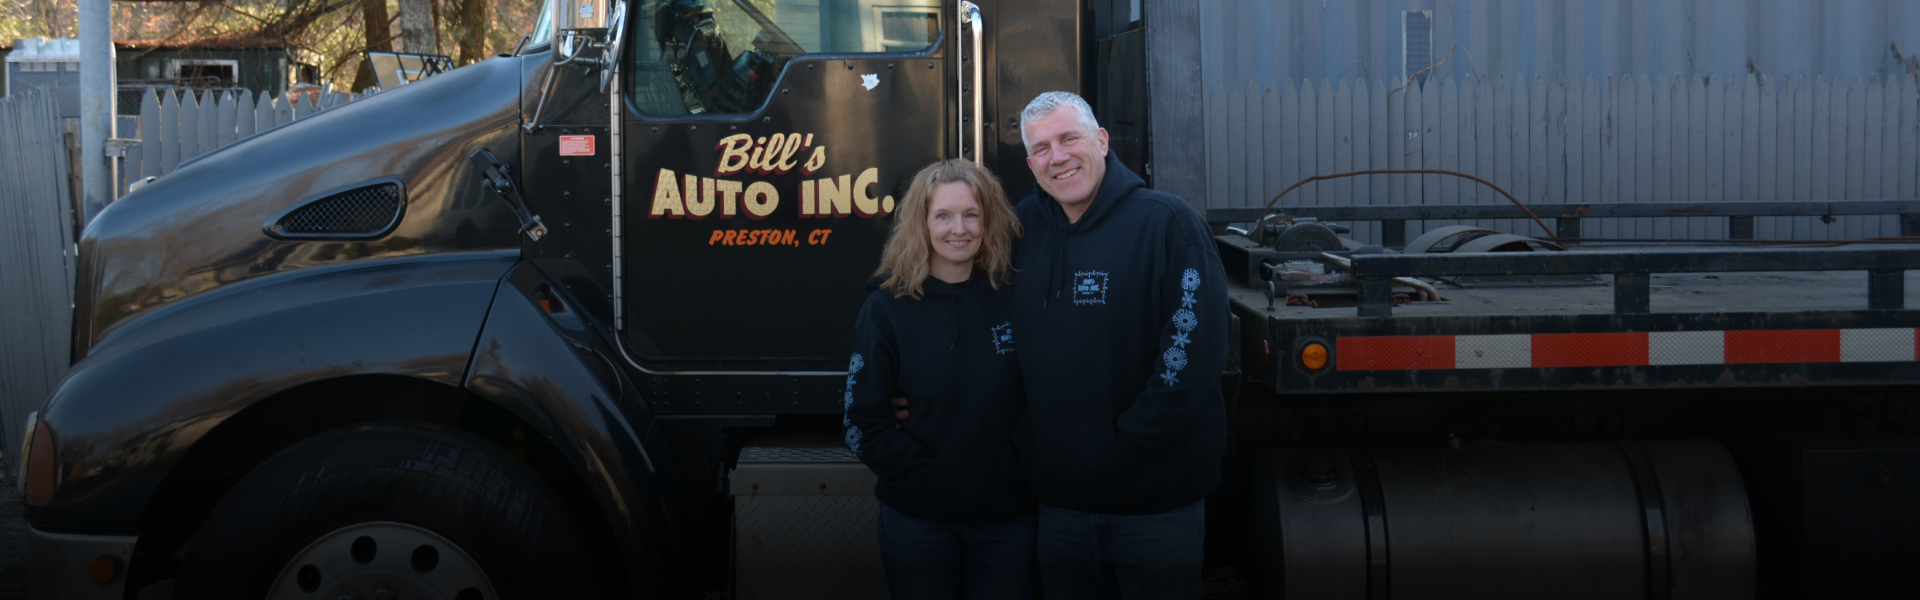 Two Man | Bill's Auto Inc.